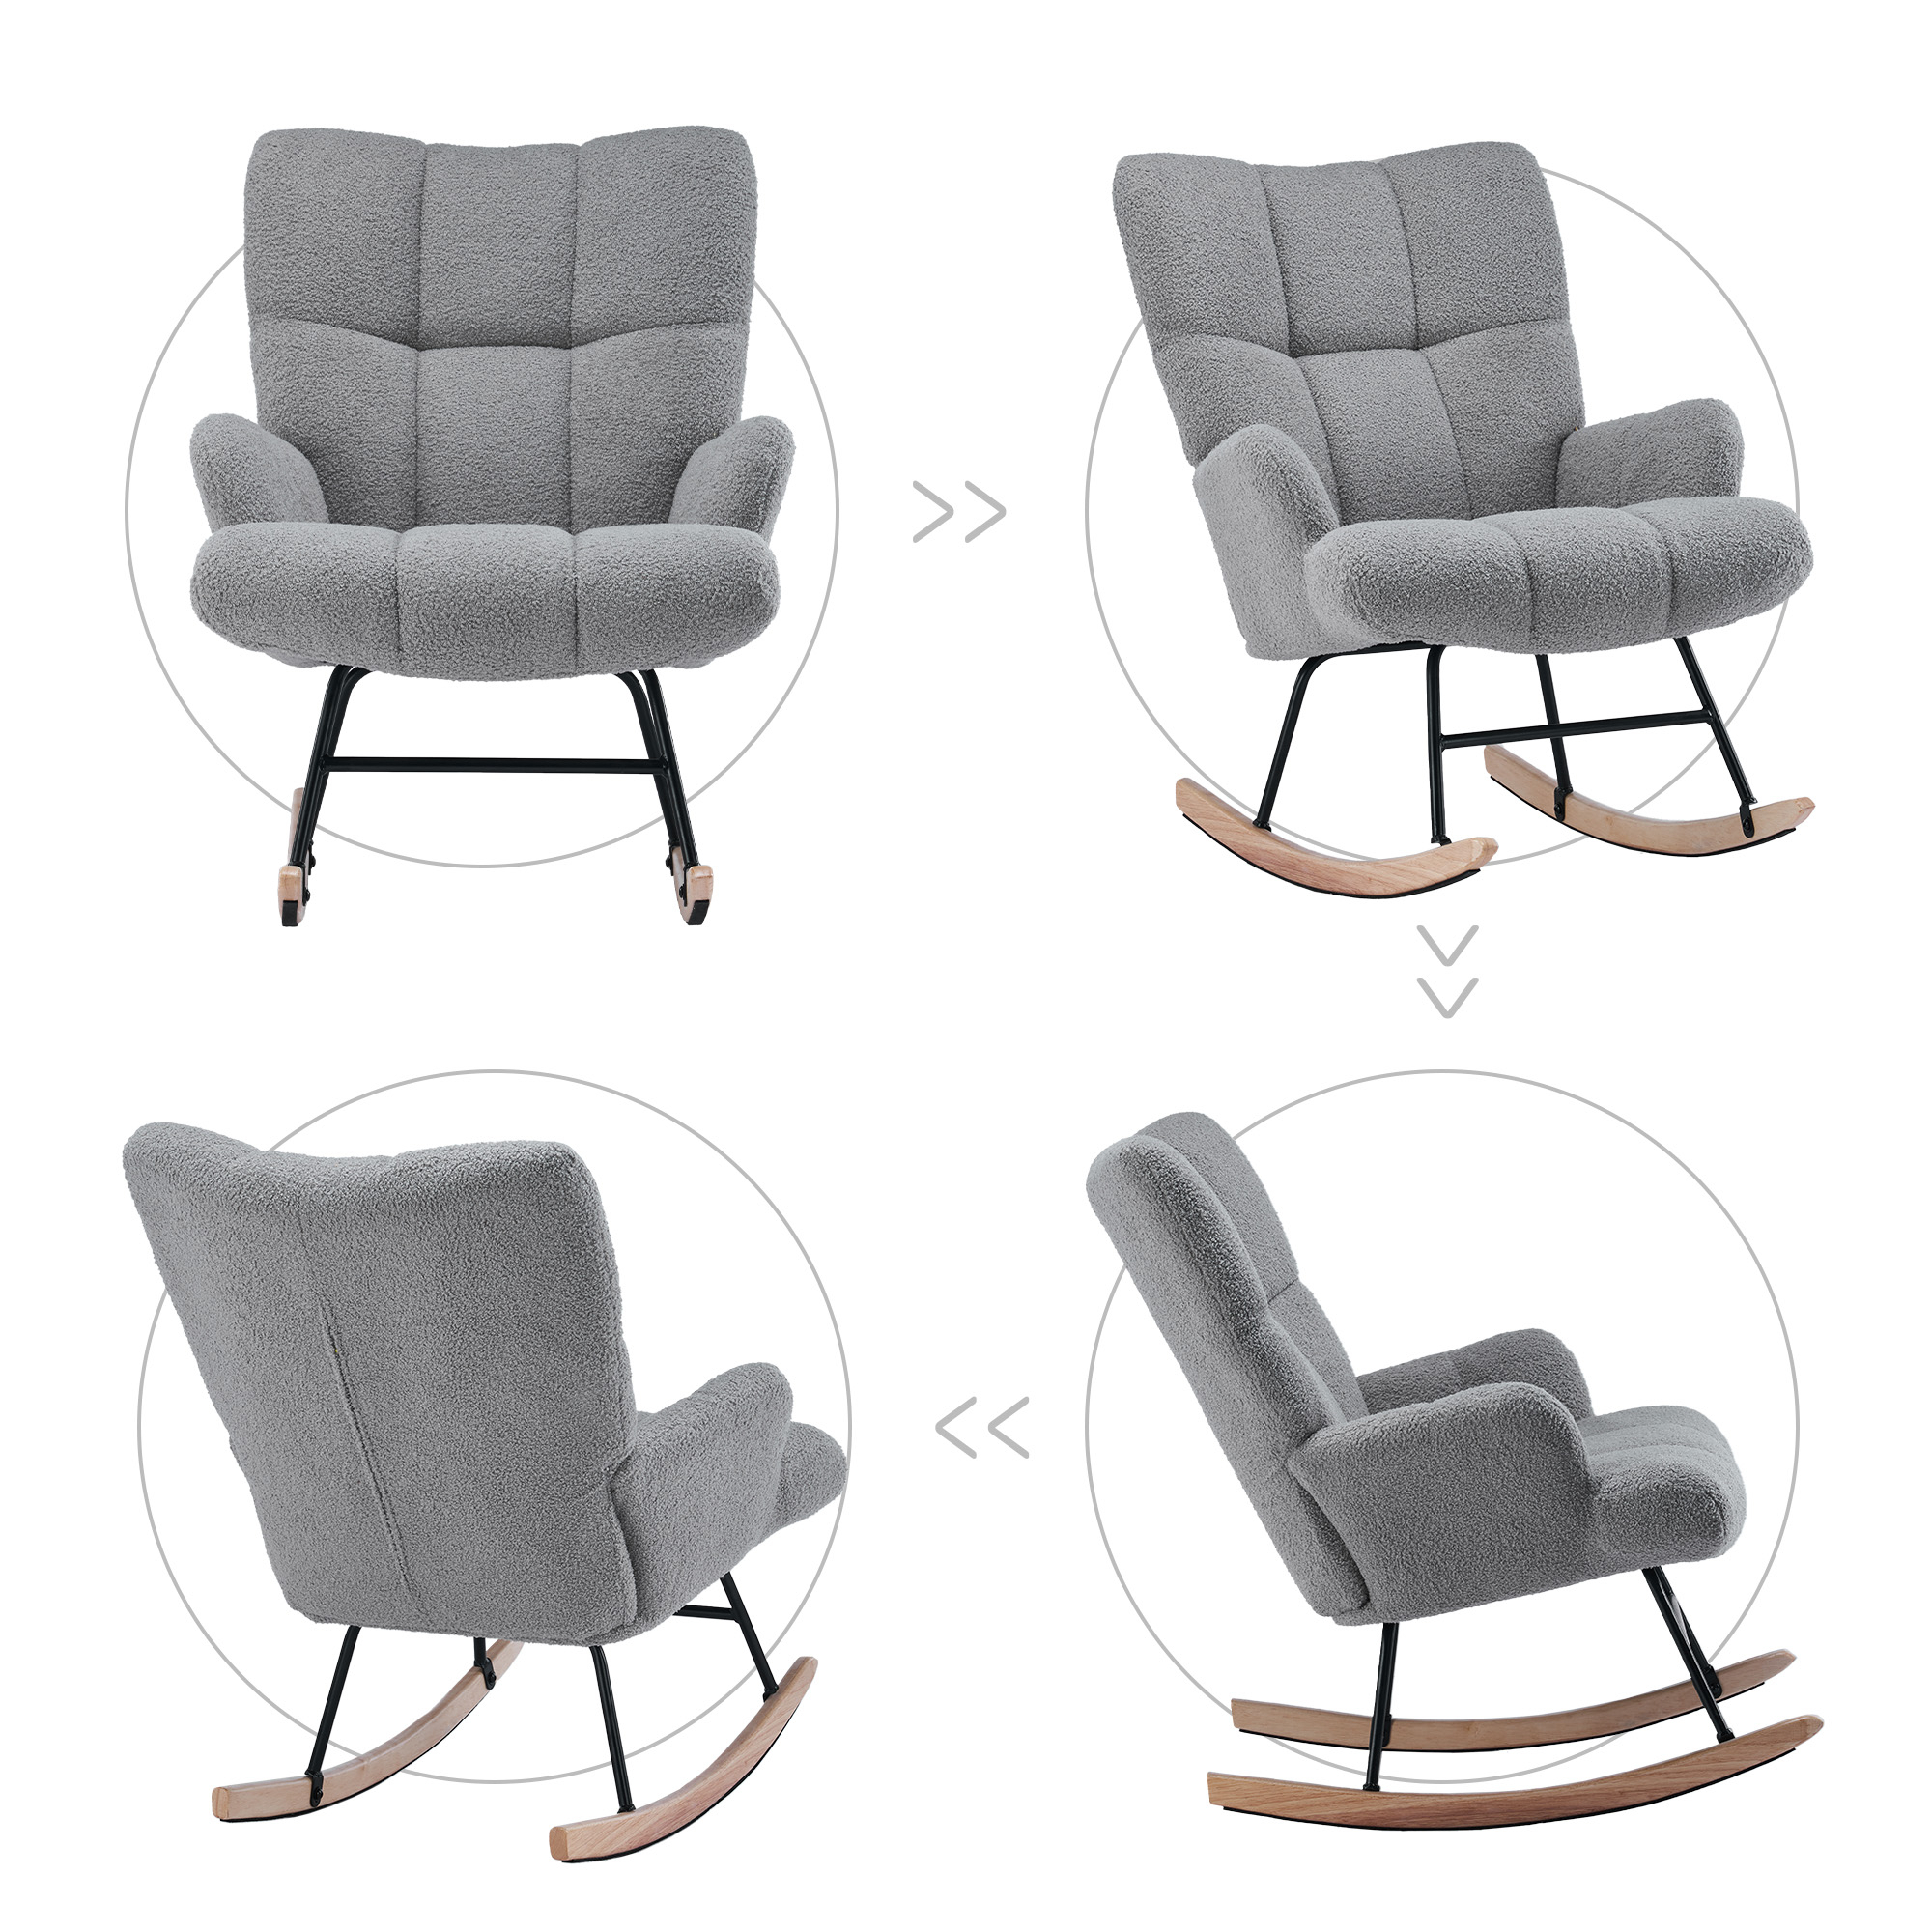 Teddy Velvet Rocking Accent Chair, Uplostered Glider Rocker Armchair For Nursery, Comfy Wingback Armchair - Light Gray